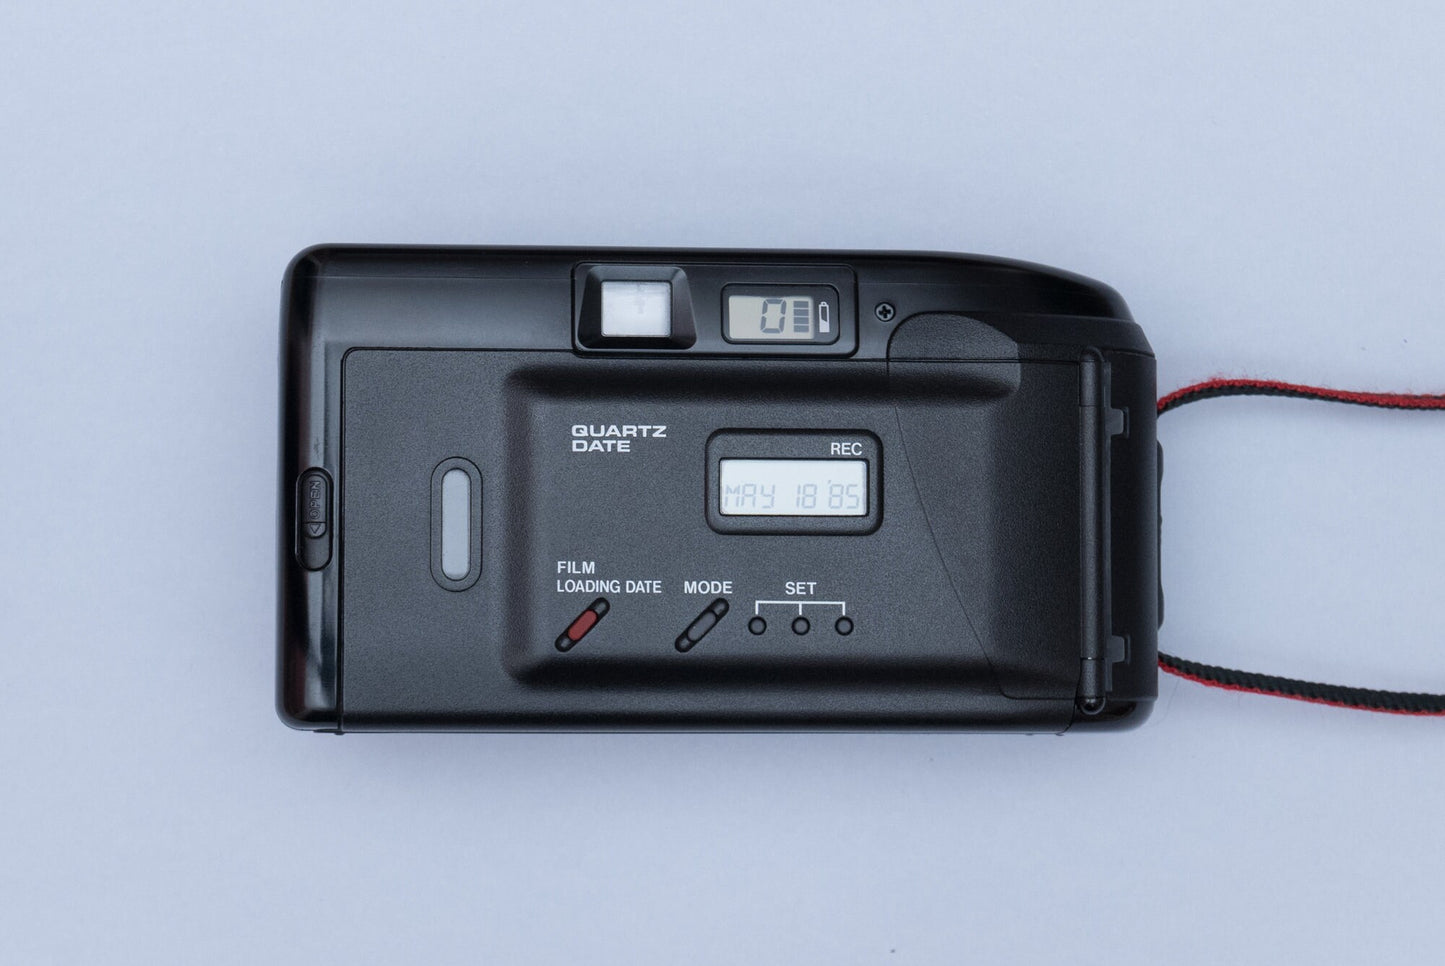 Canon Sure Shot Supreme Autoboy 3 Top Shot Compact 35mm Film Camera